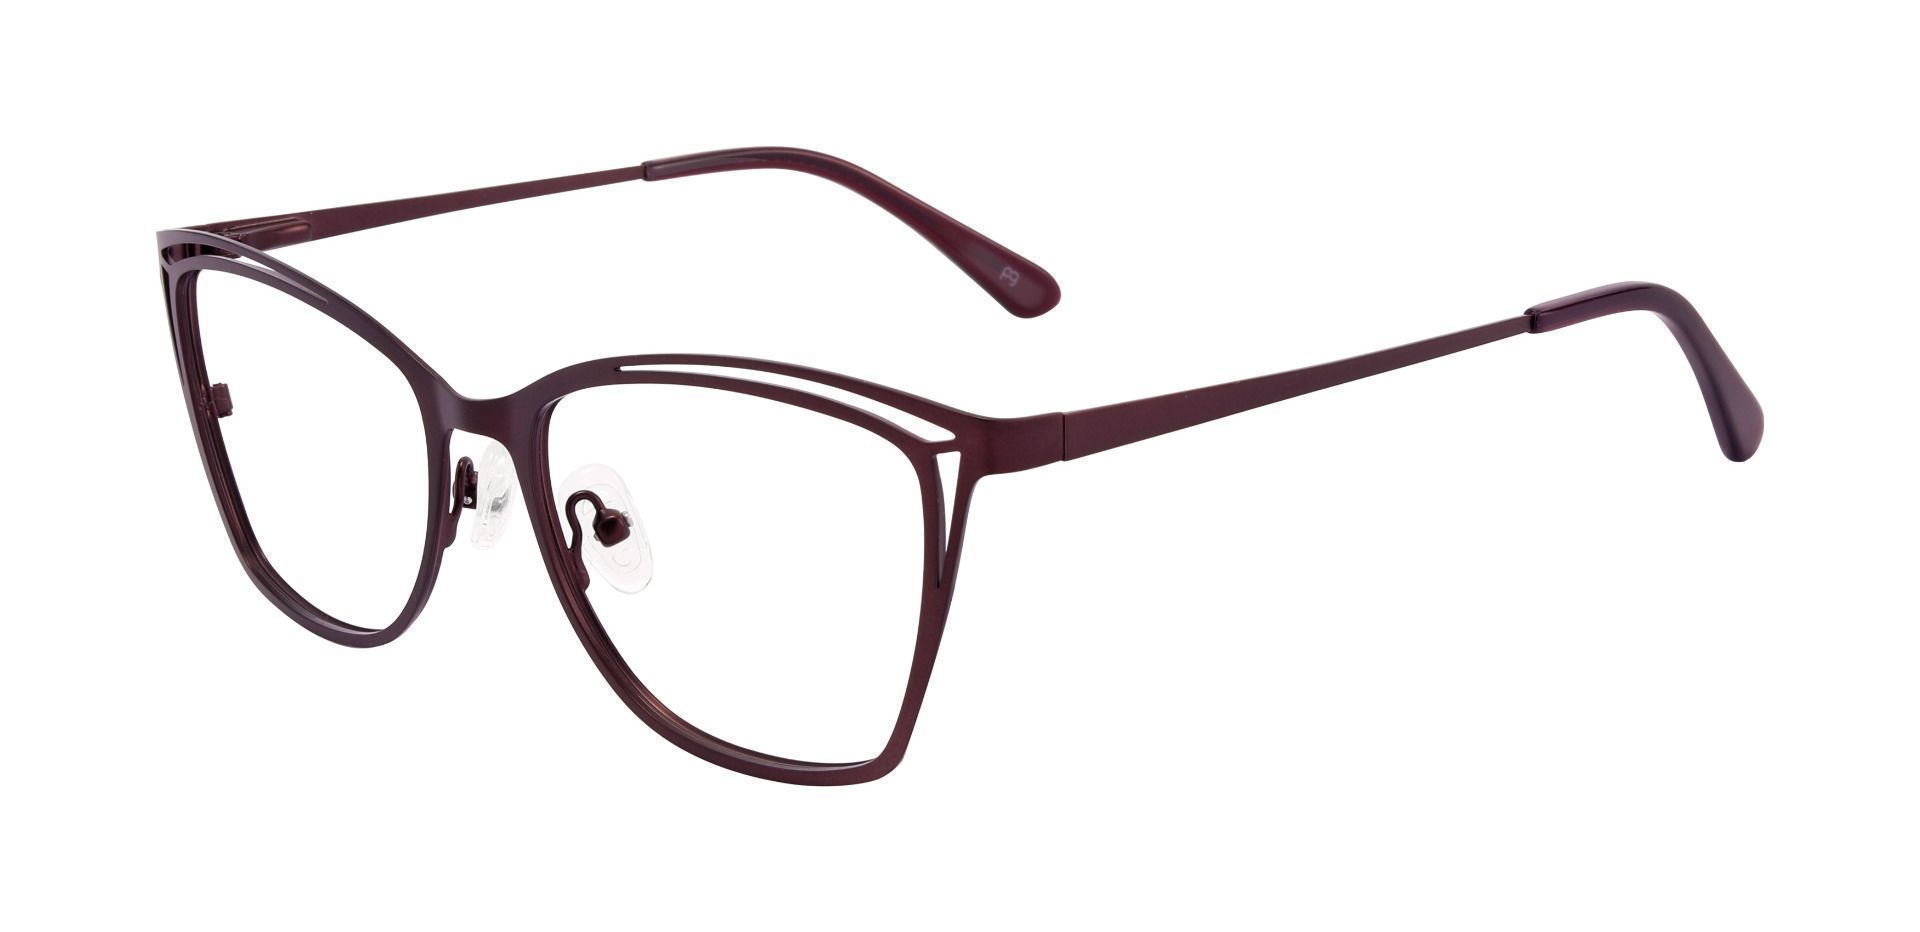 Arlington Cat Eye Prescription Glasses - Red